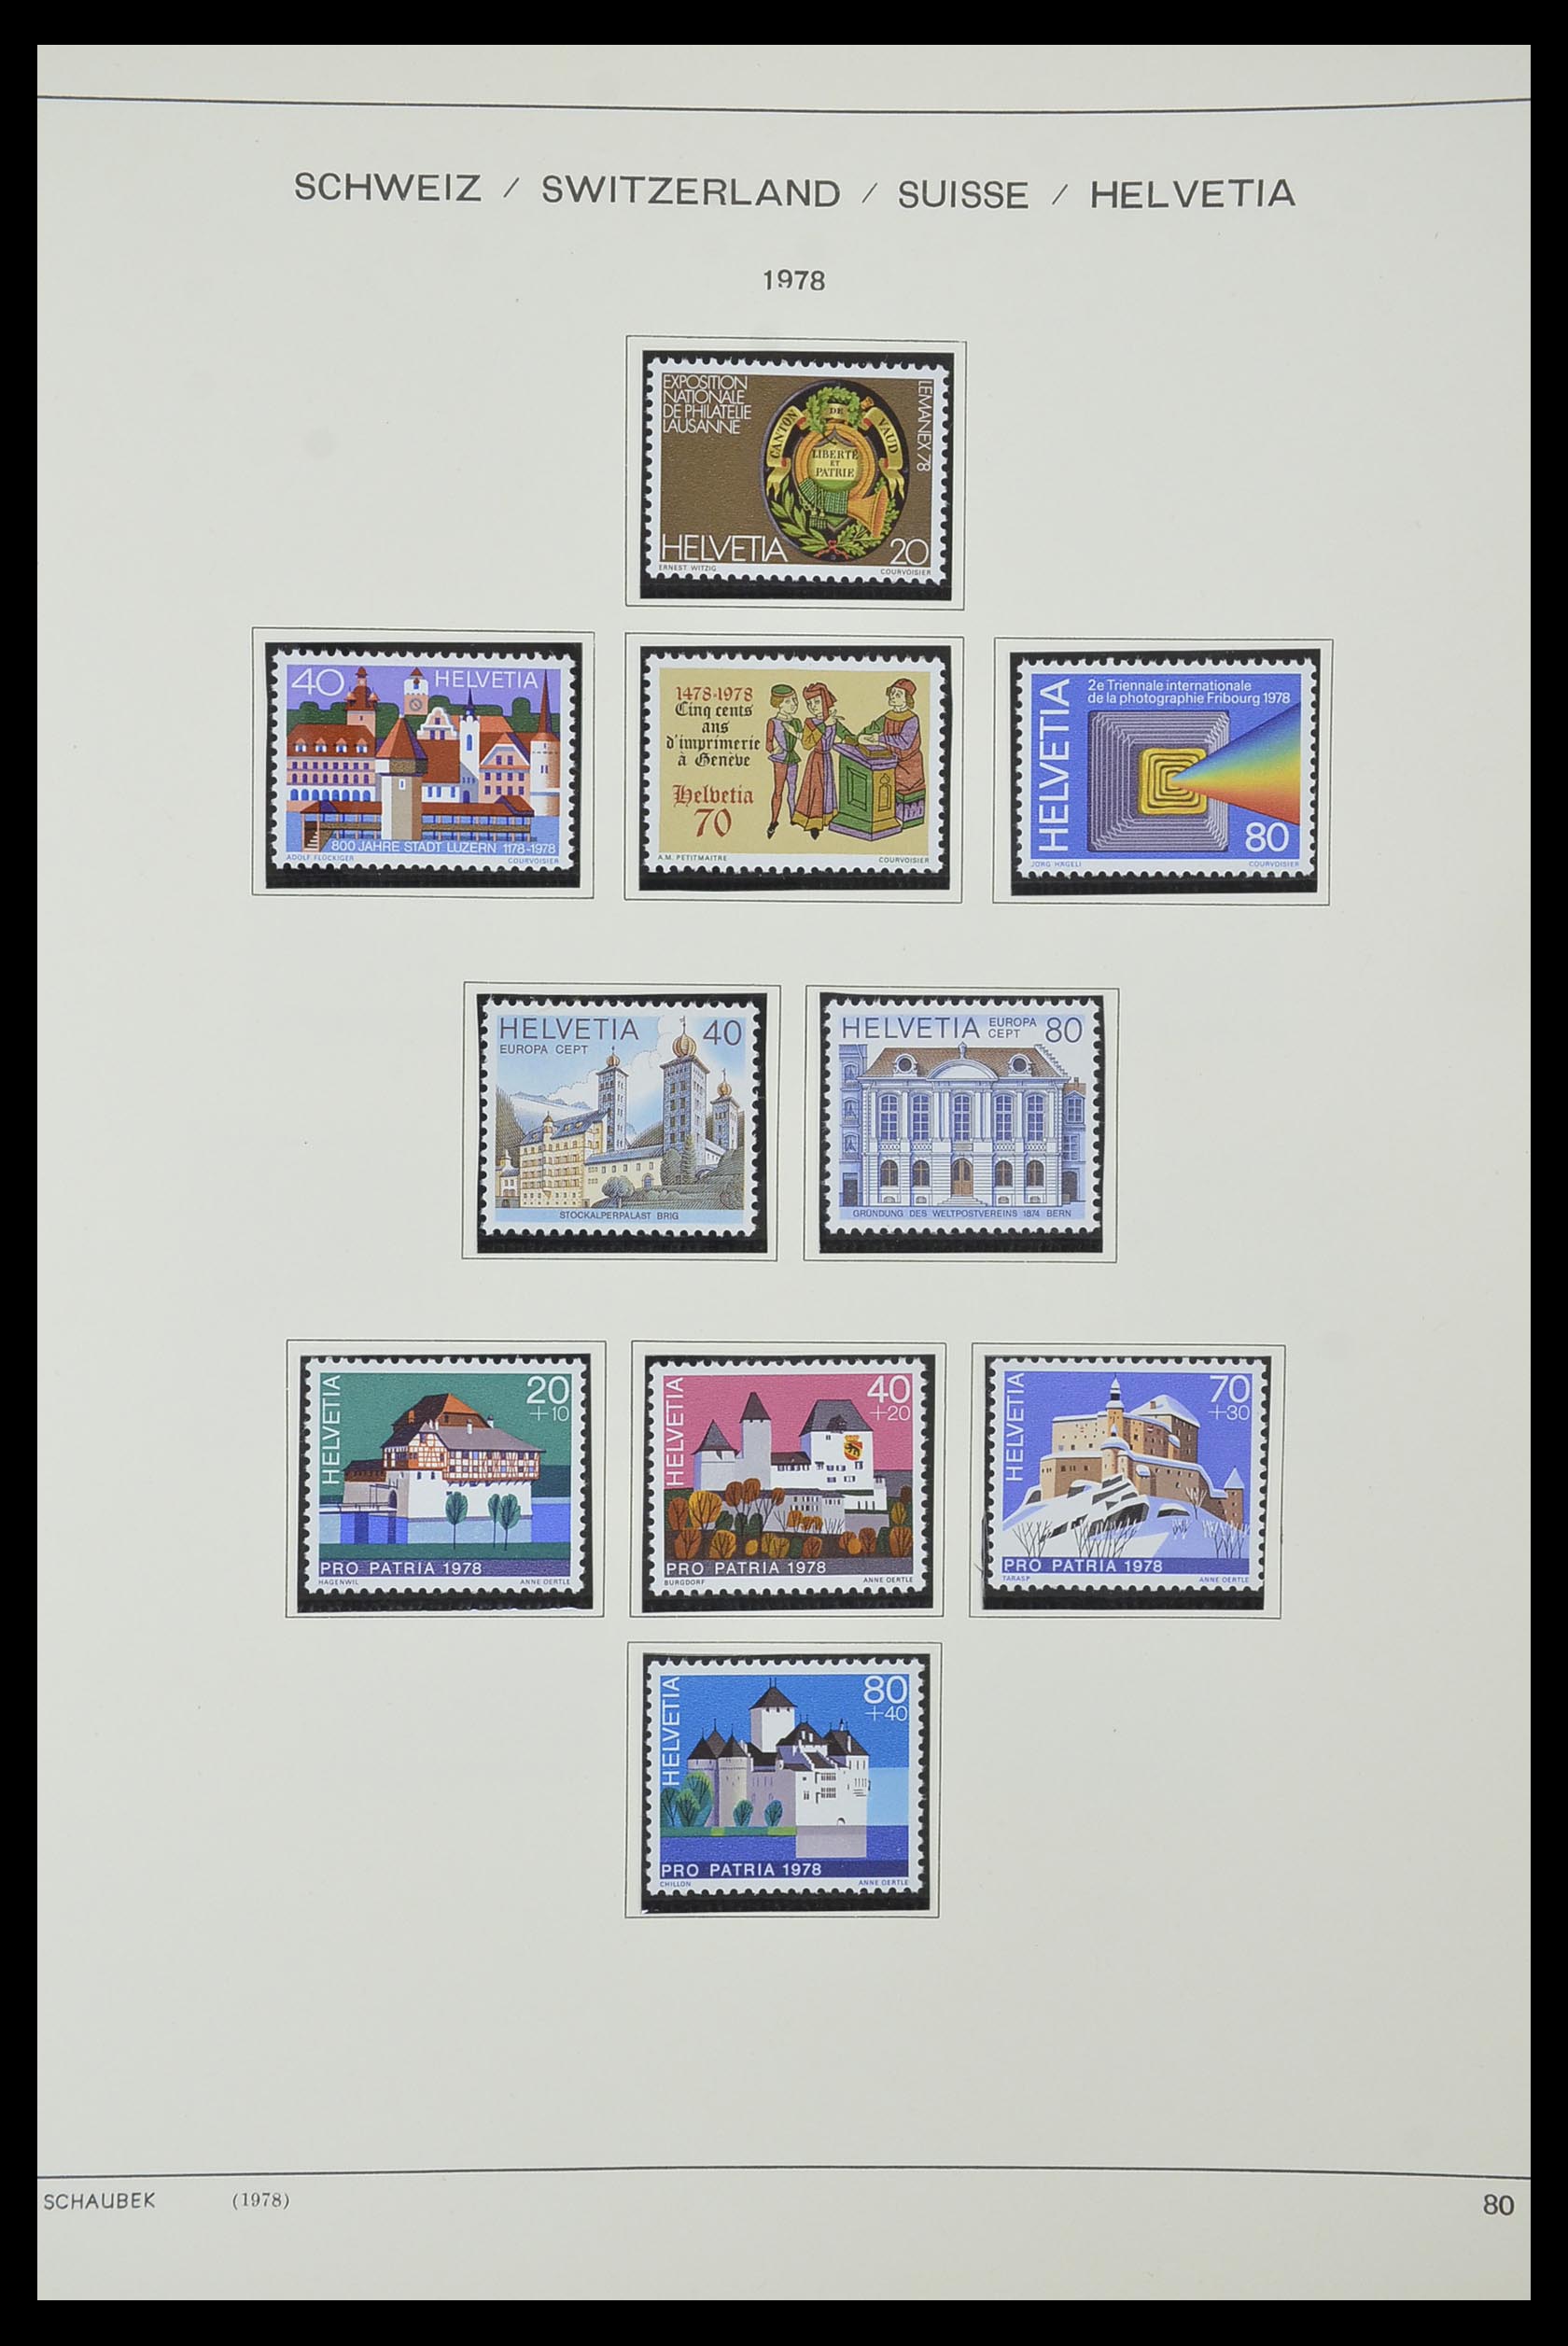 33601 067 - Stamp collection 33601 Switzerland 1854-1985.